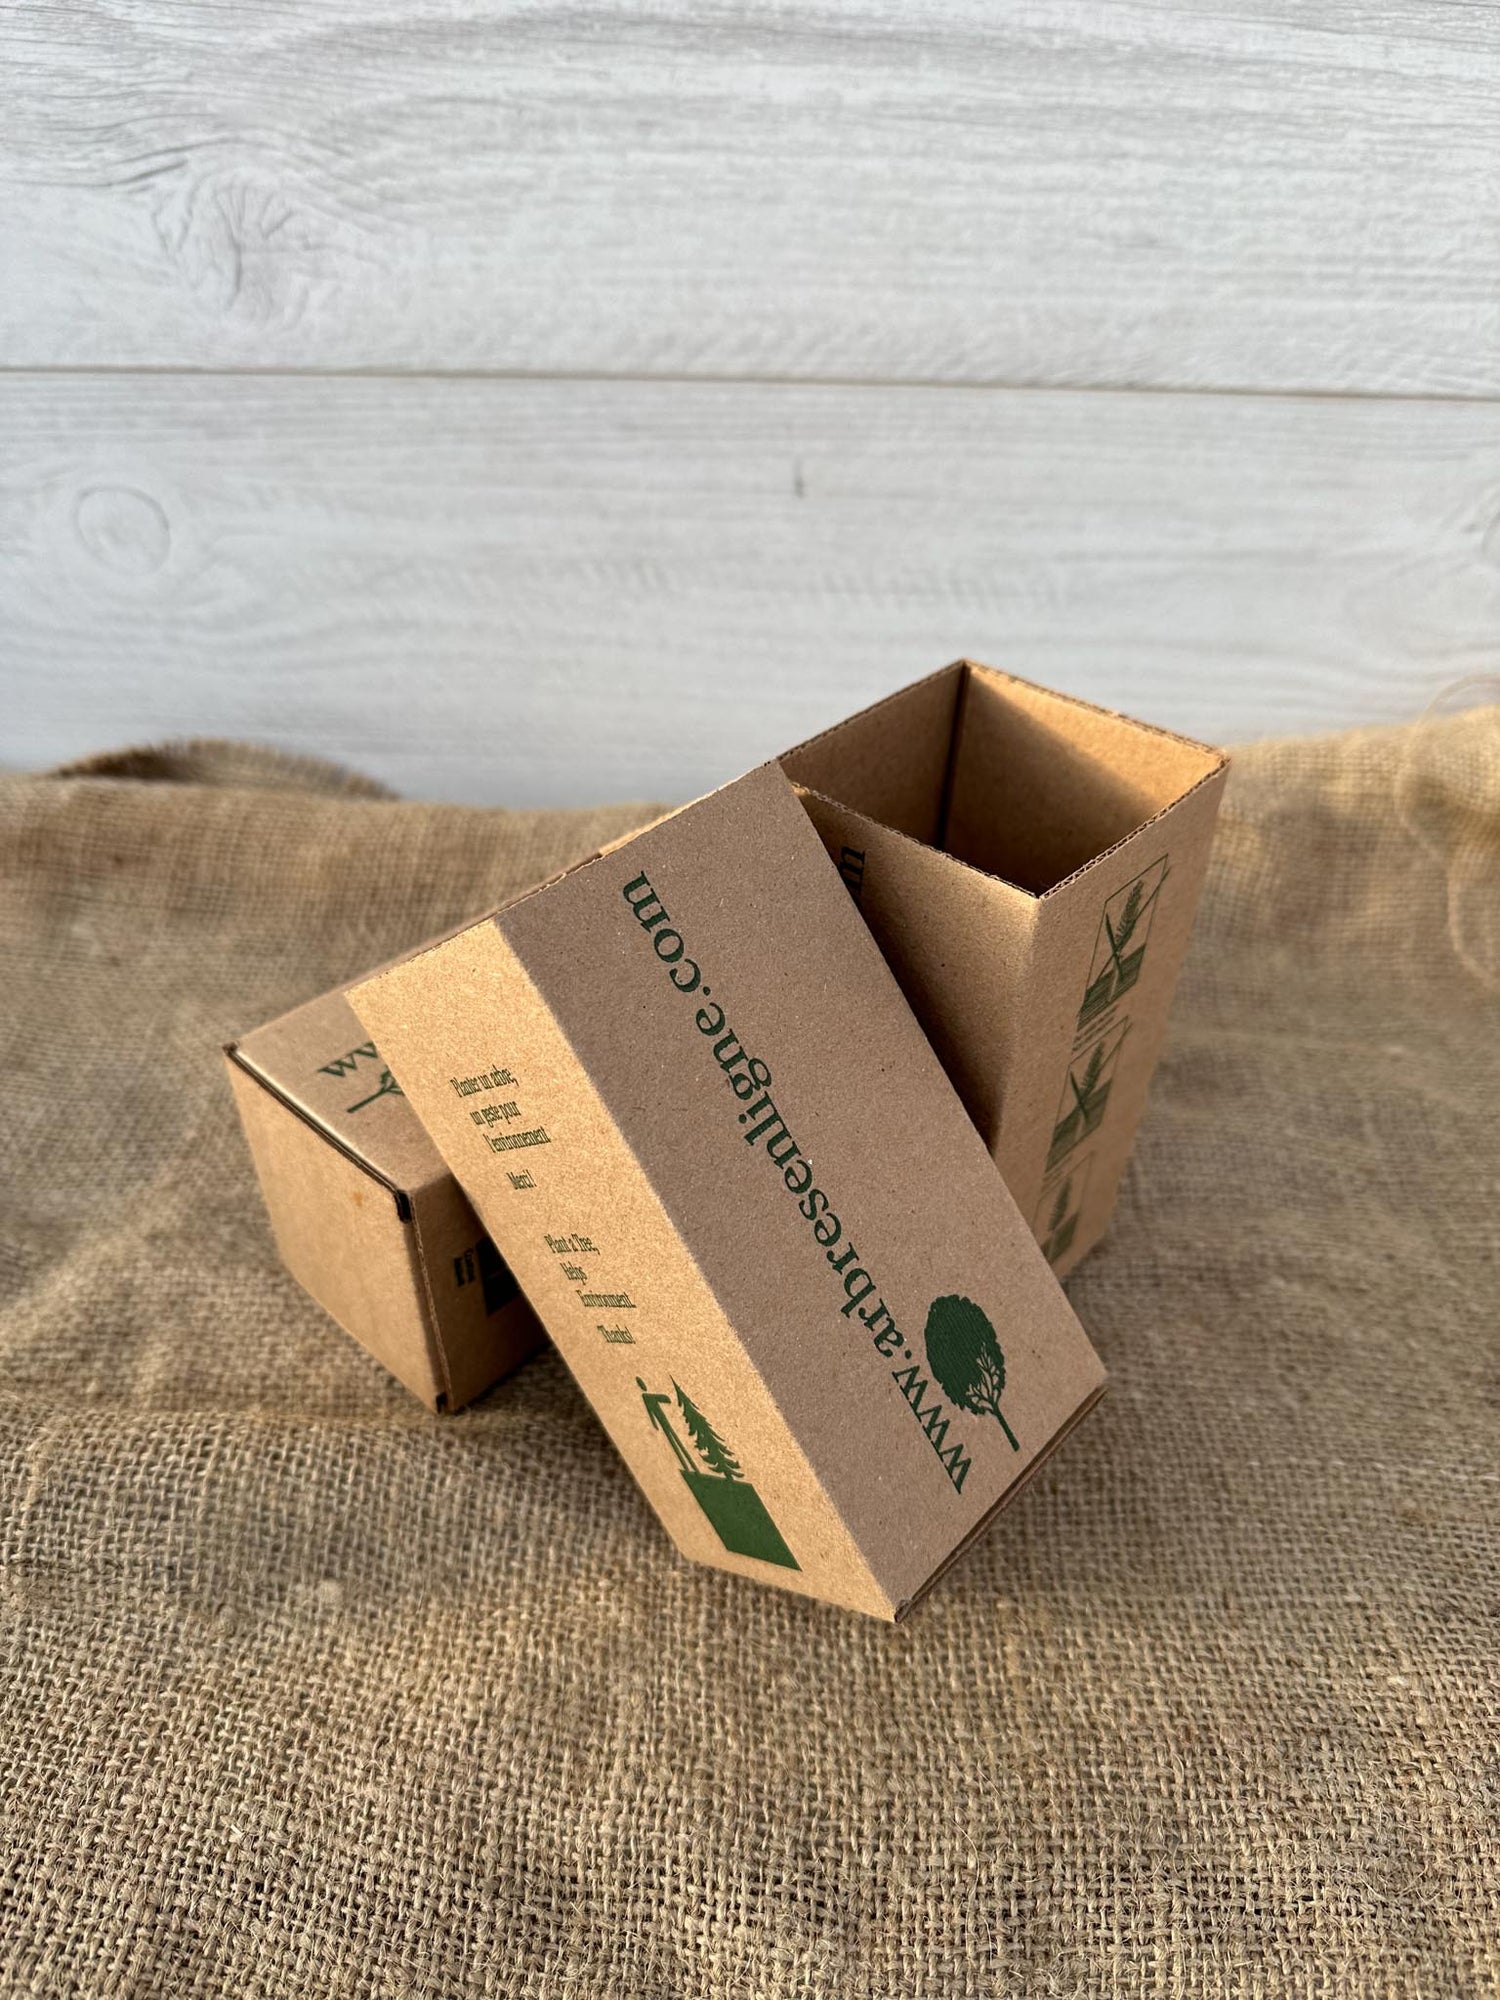 Grande boite en carton pour offrir un arbre en cadeau